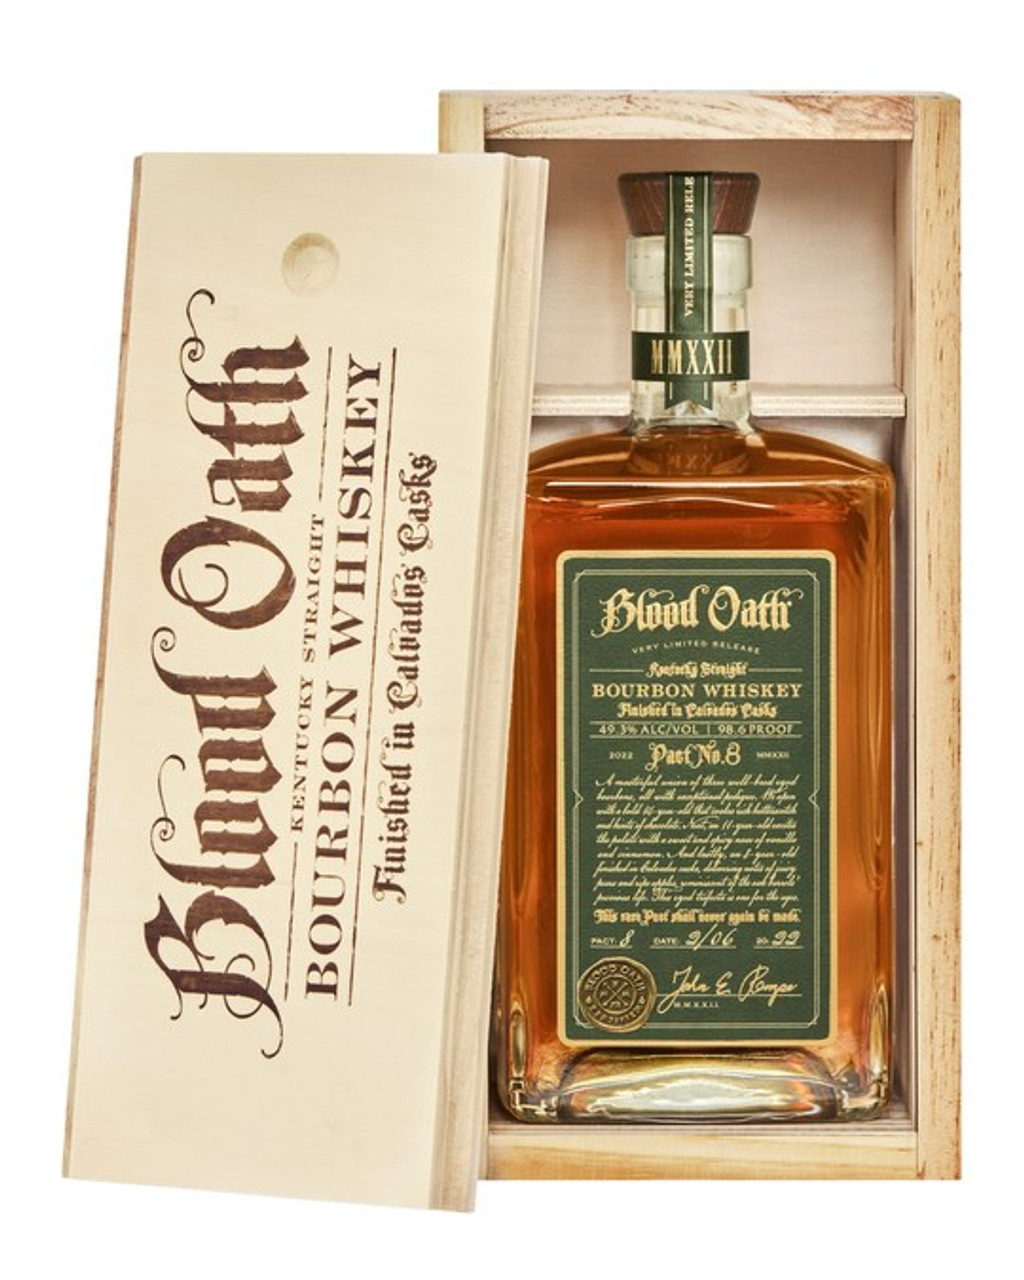 Blood Oath Pact No 8 Bourbon Whiskey (750ml)